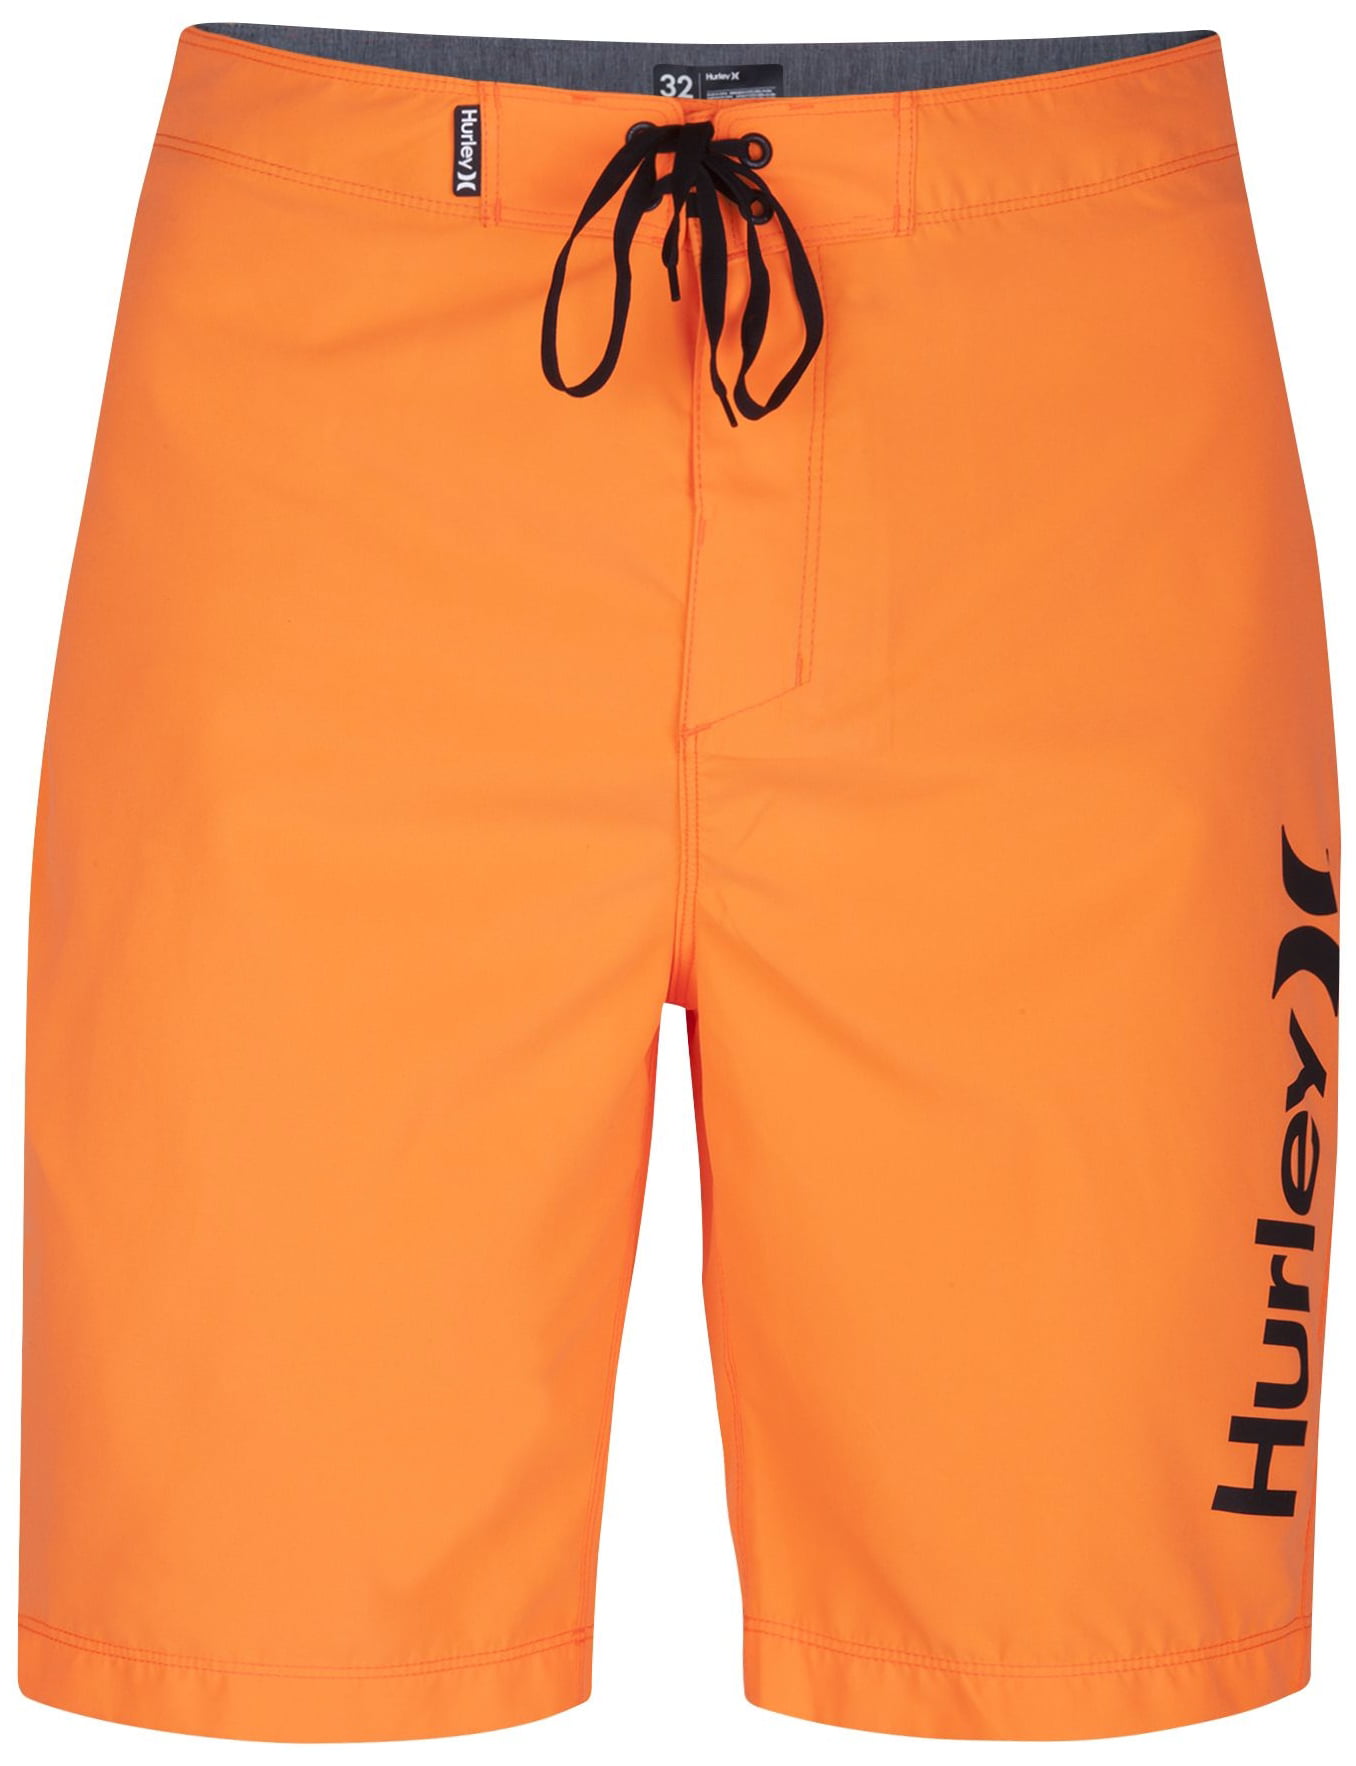 Details about   Jobe Impress Rebel Shorts Swim Children Trunks Boardshort Orange B Stock N5 G19 